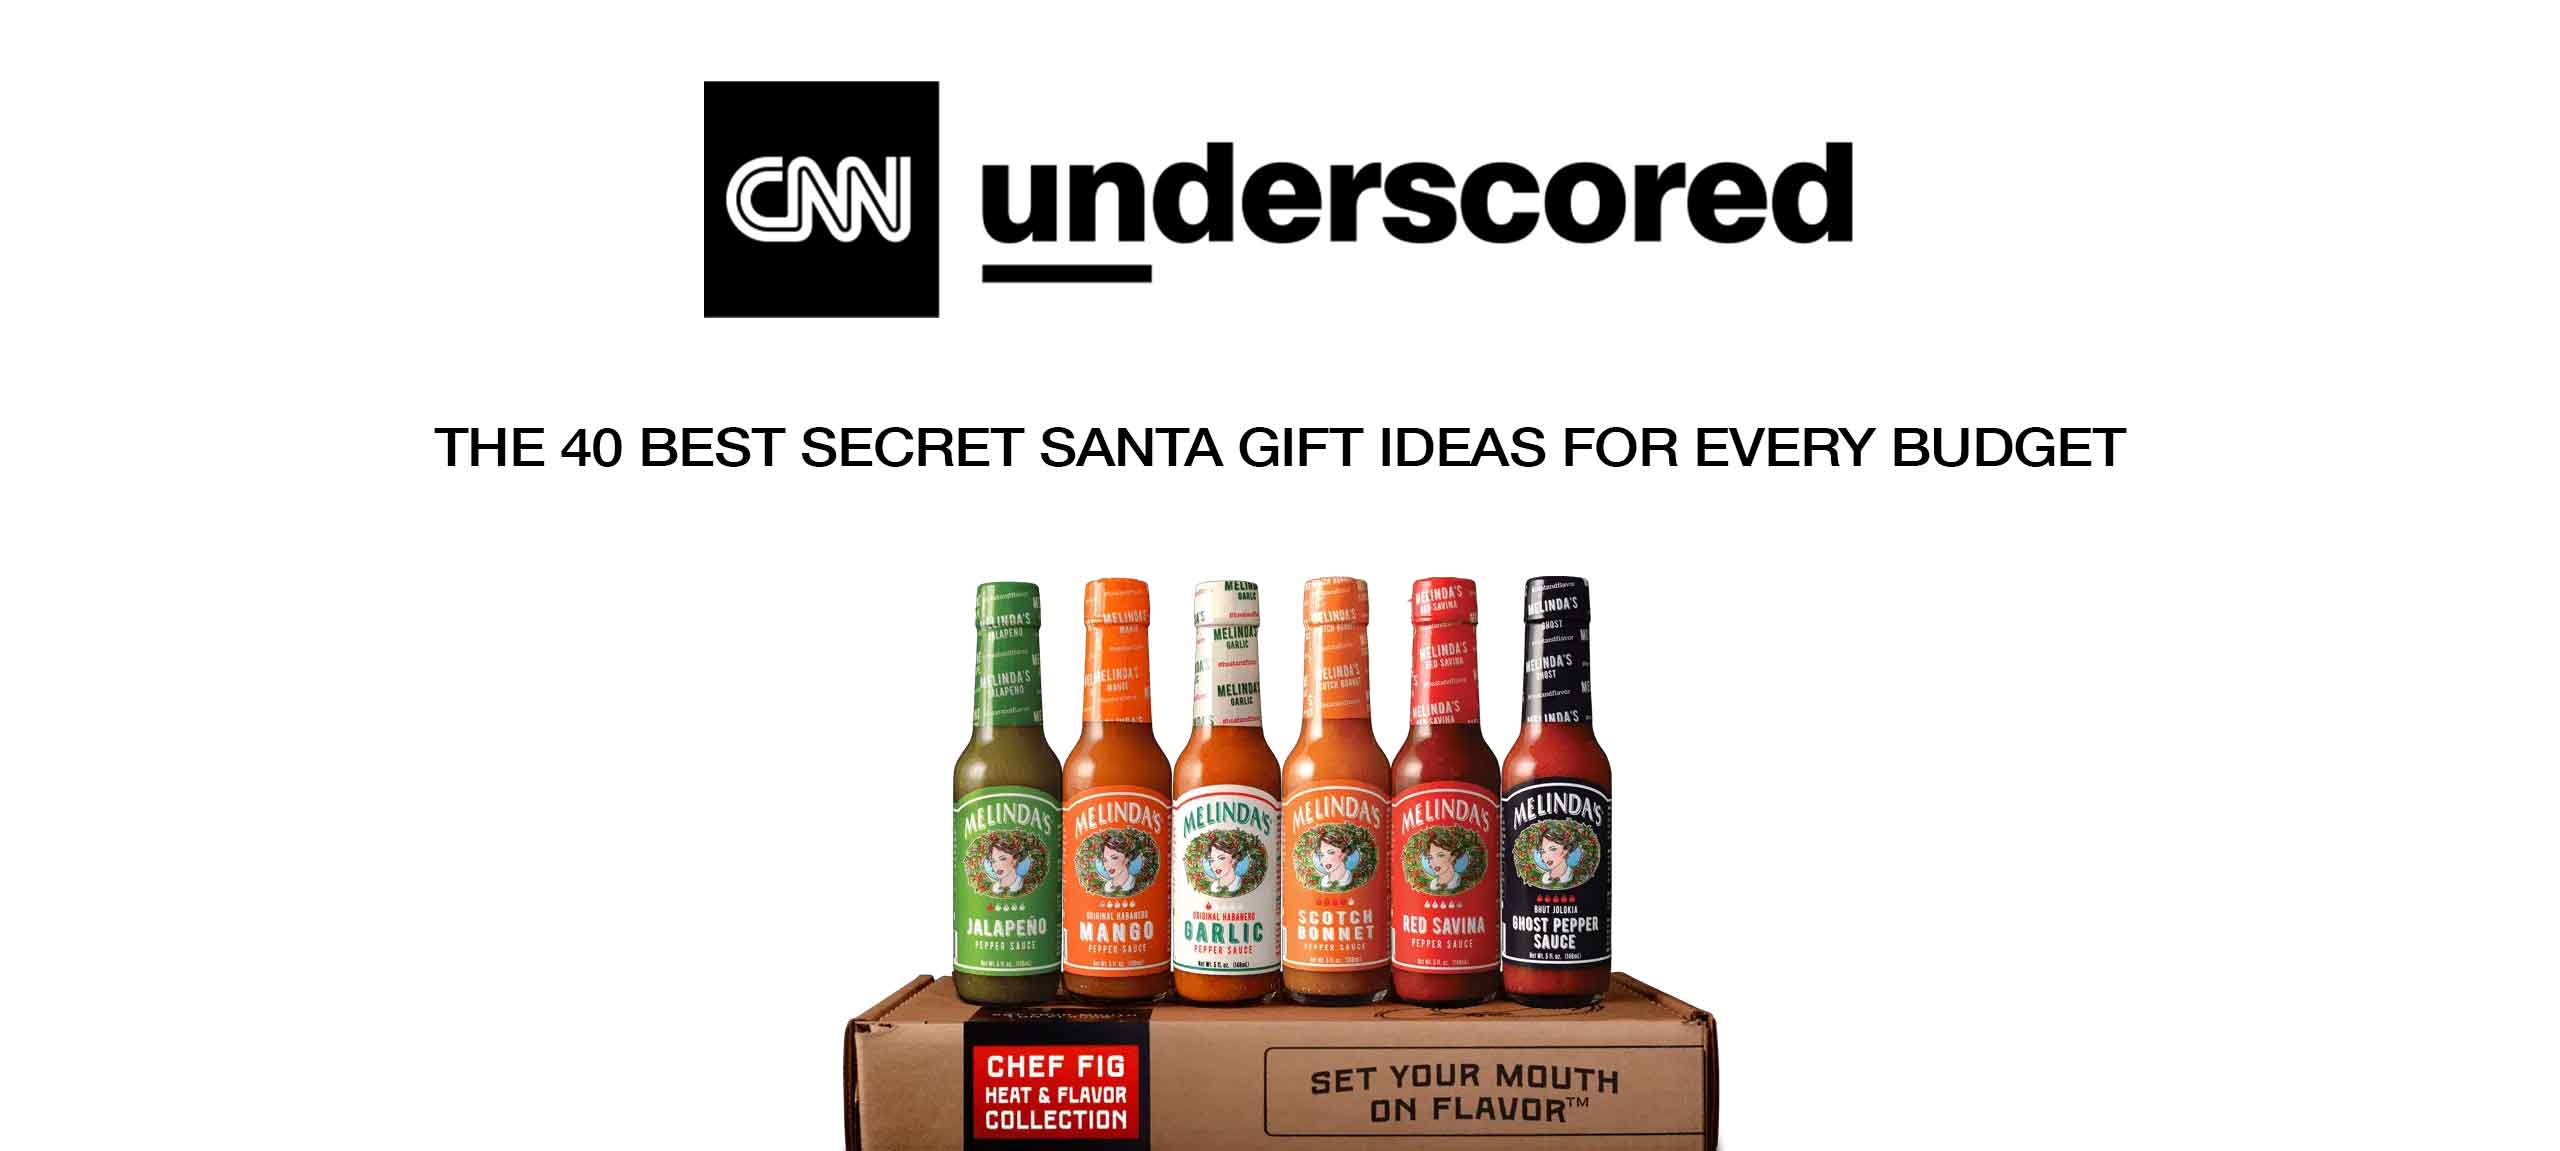 The 40 best Secret Santa gift ideas for every budget | Says CNN_Underscored